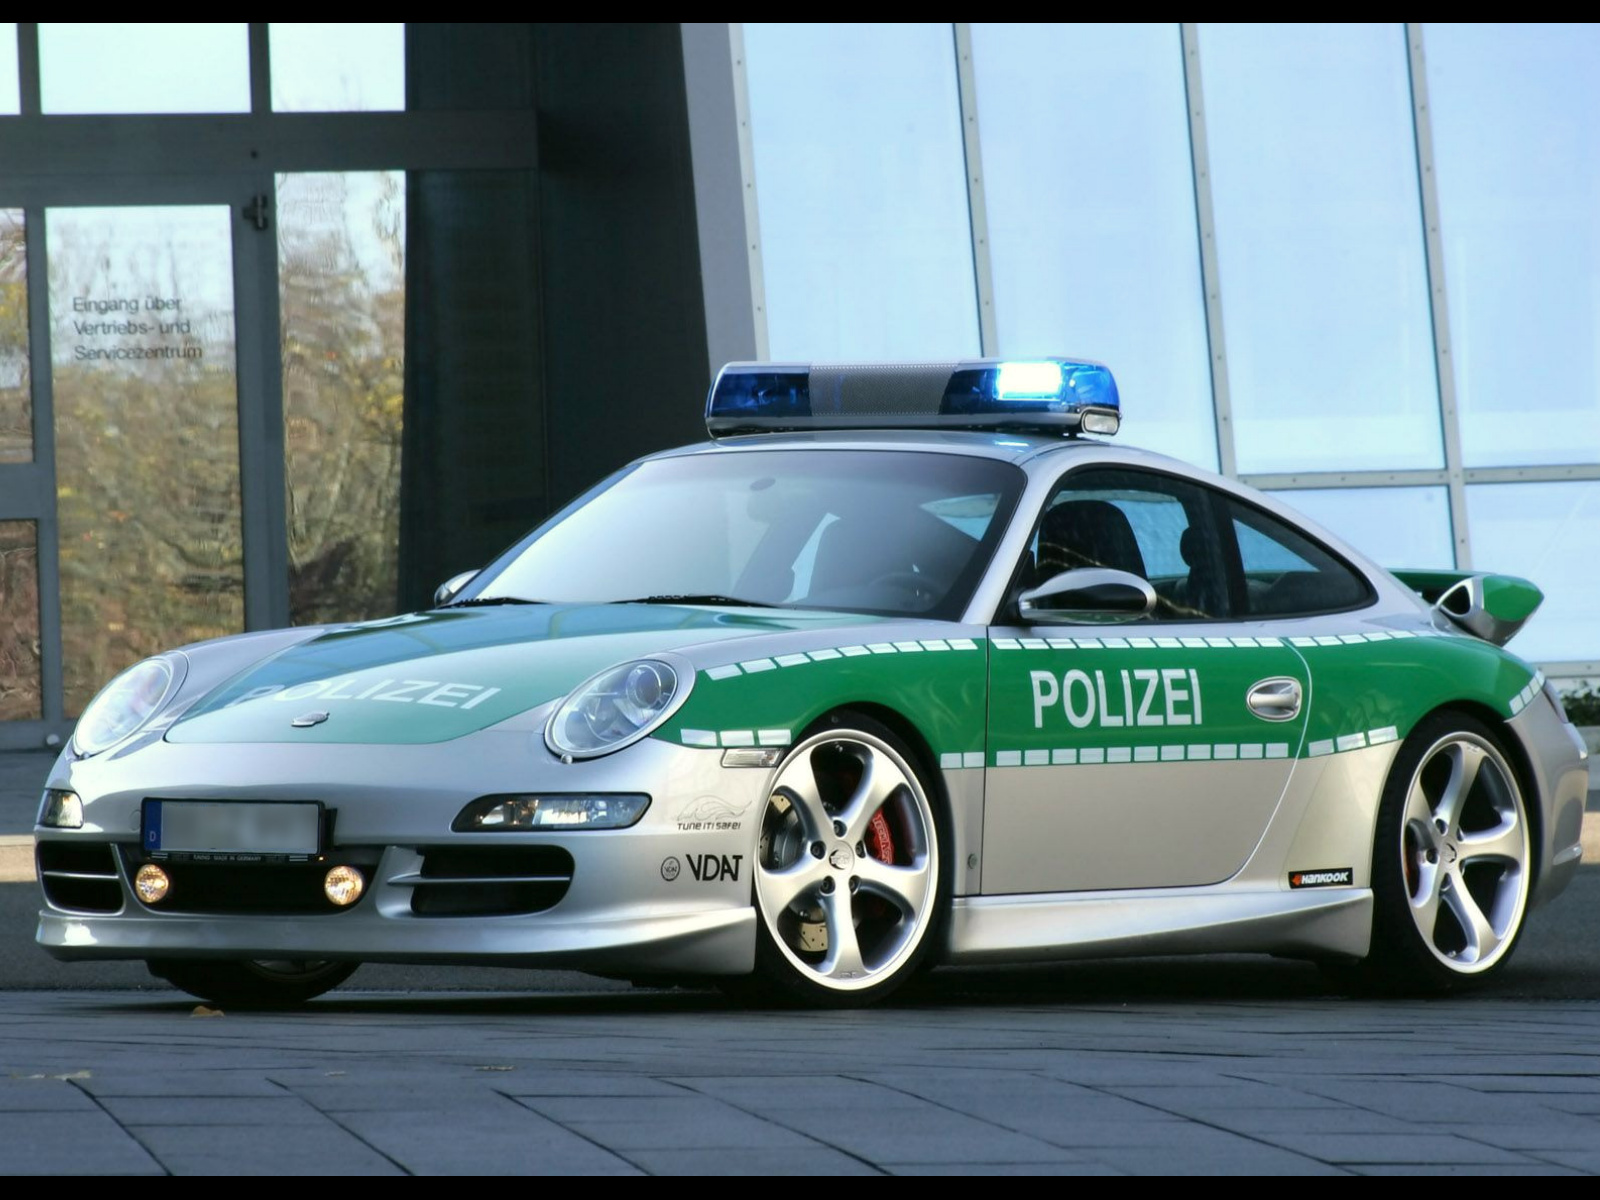 Cars Porsche Police Car Wallpaper Free Images at Clkercom   vector